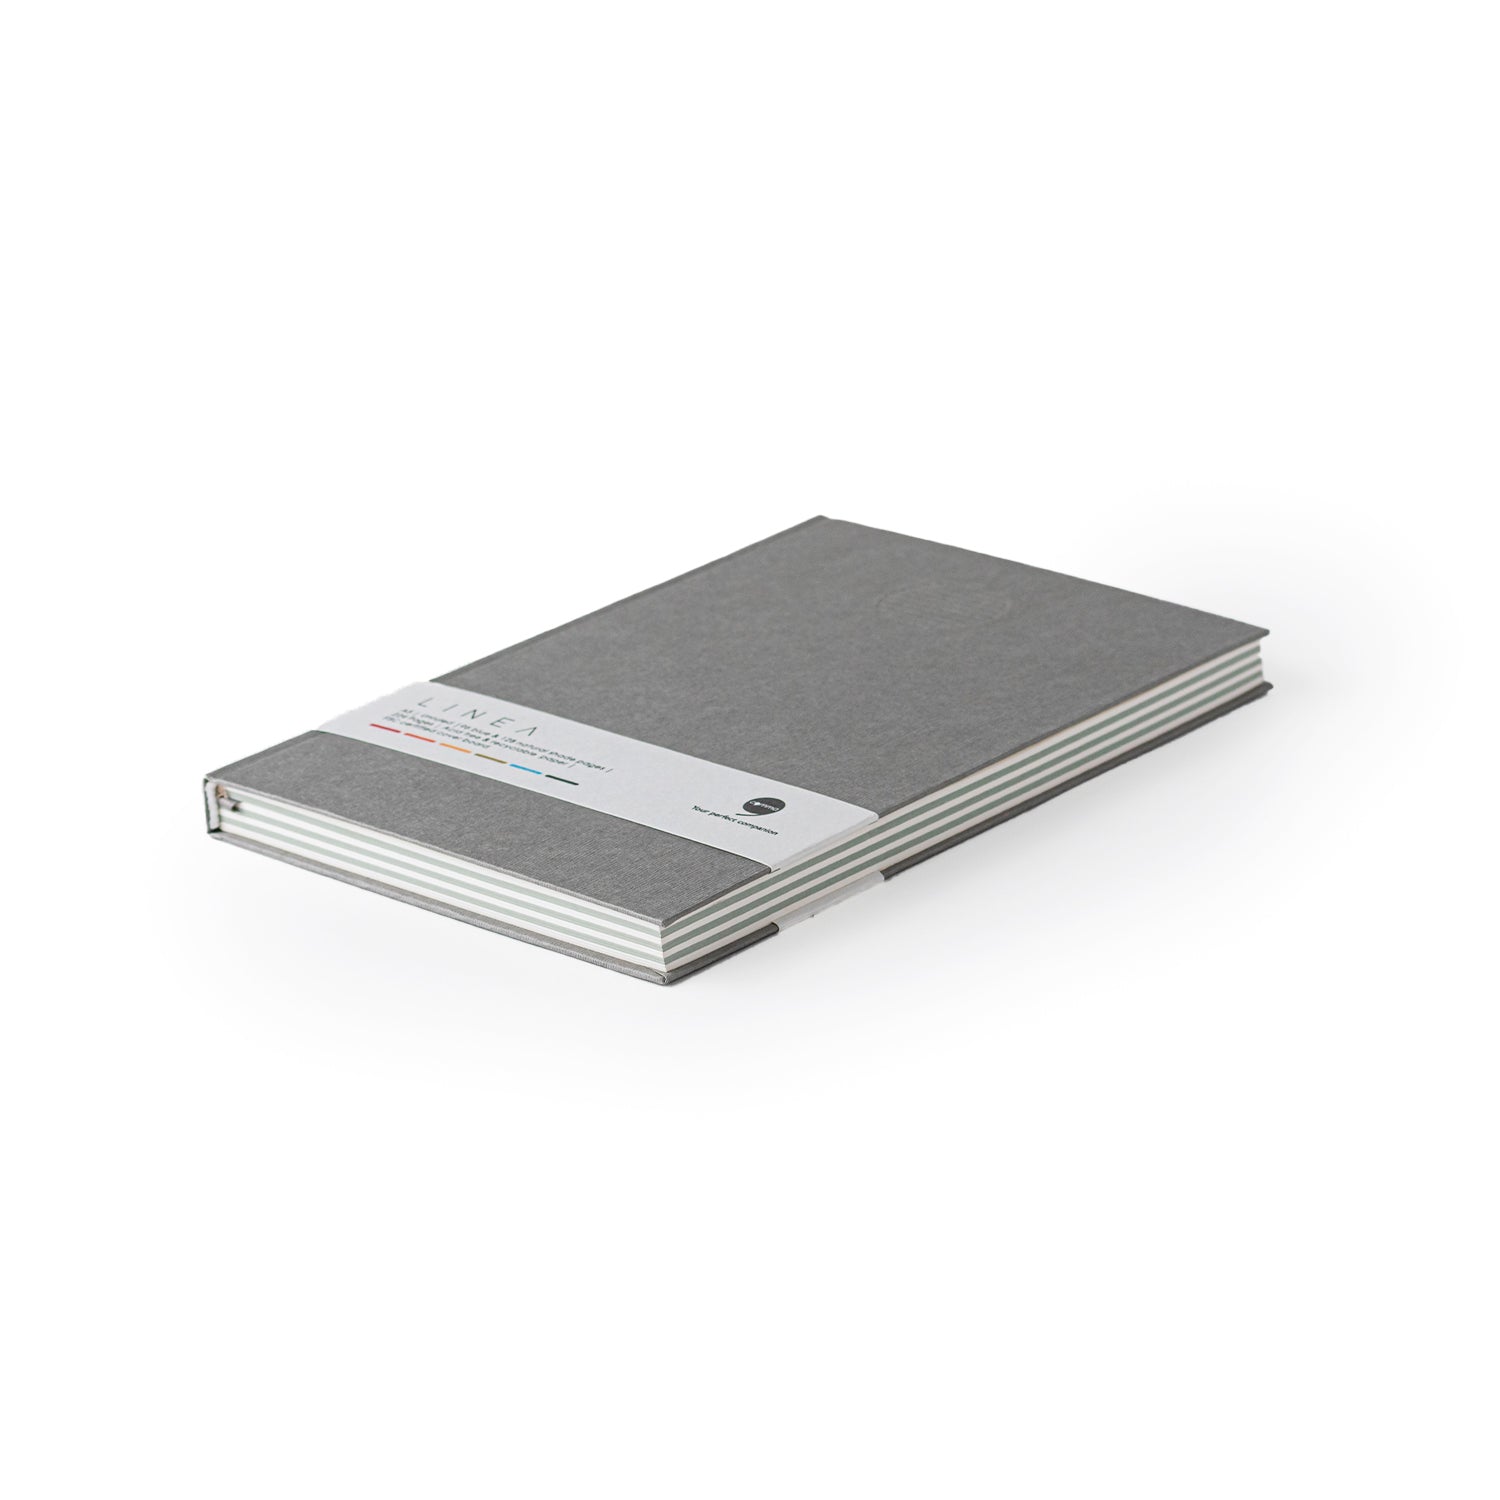 Linea A5 Notebook Unruled - Grey